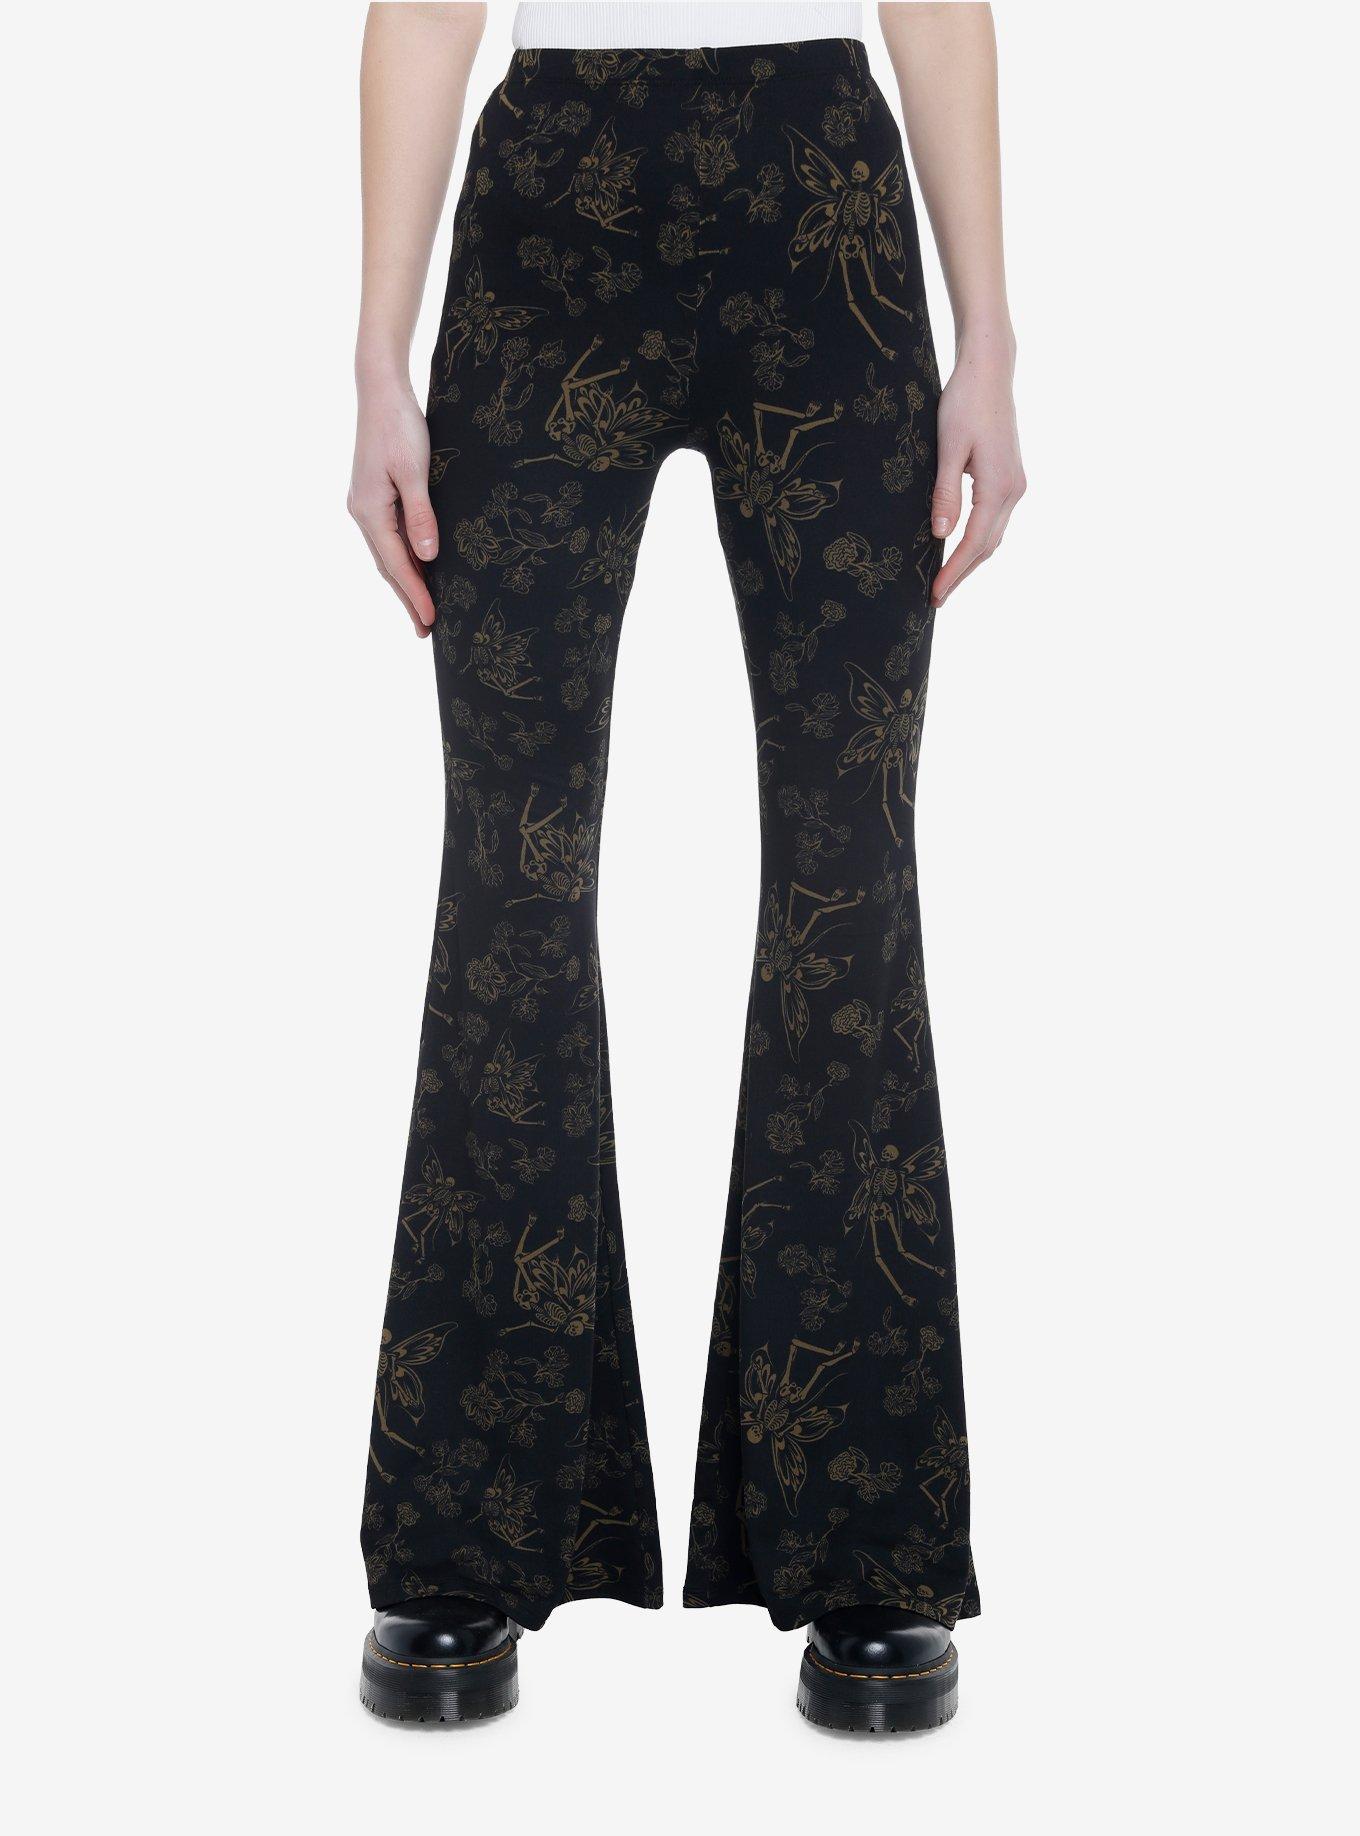 Express, Pants & Jumpsuits, Express Design Studio Stylist Flare Pants  Paisley Black Trousers Size 2